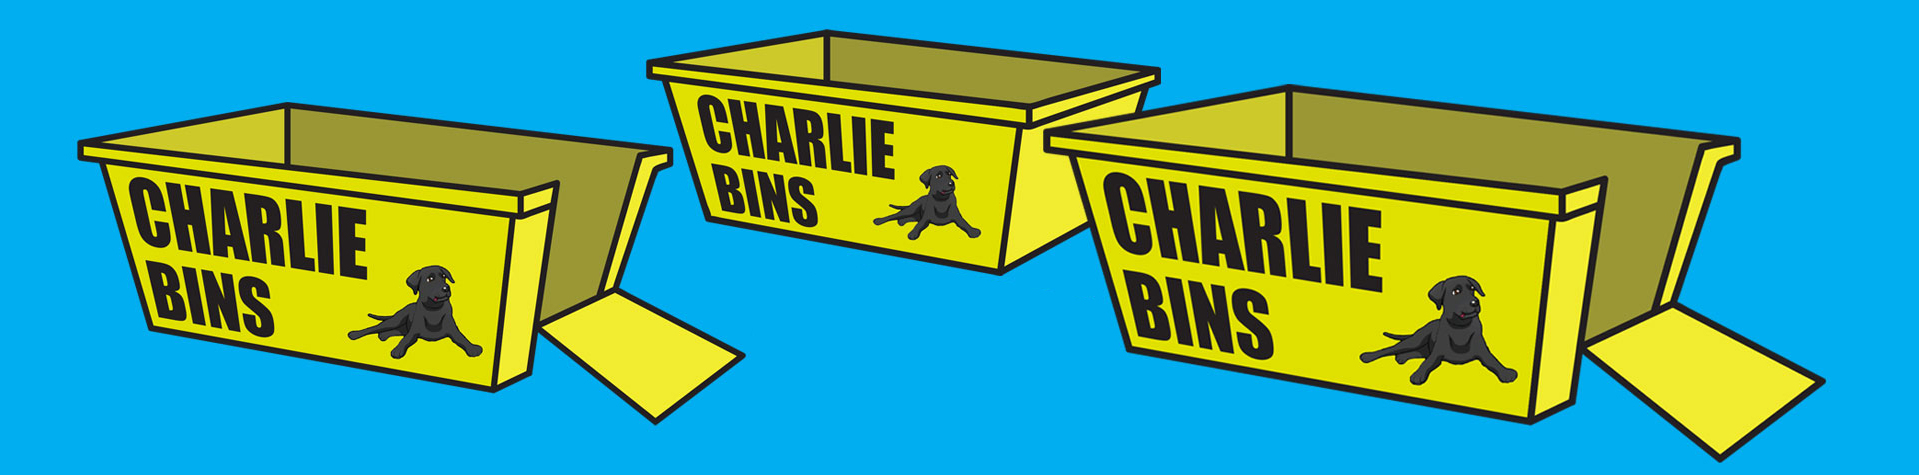 charlie bins skip bins in melbourne